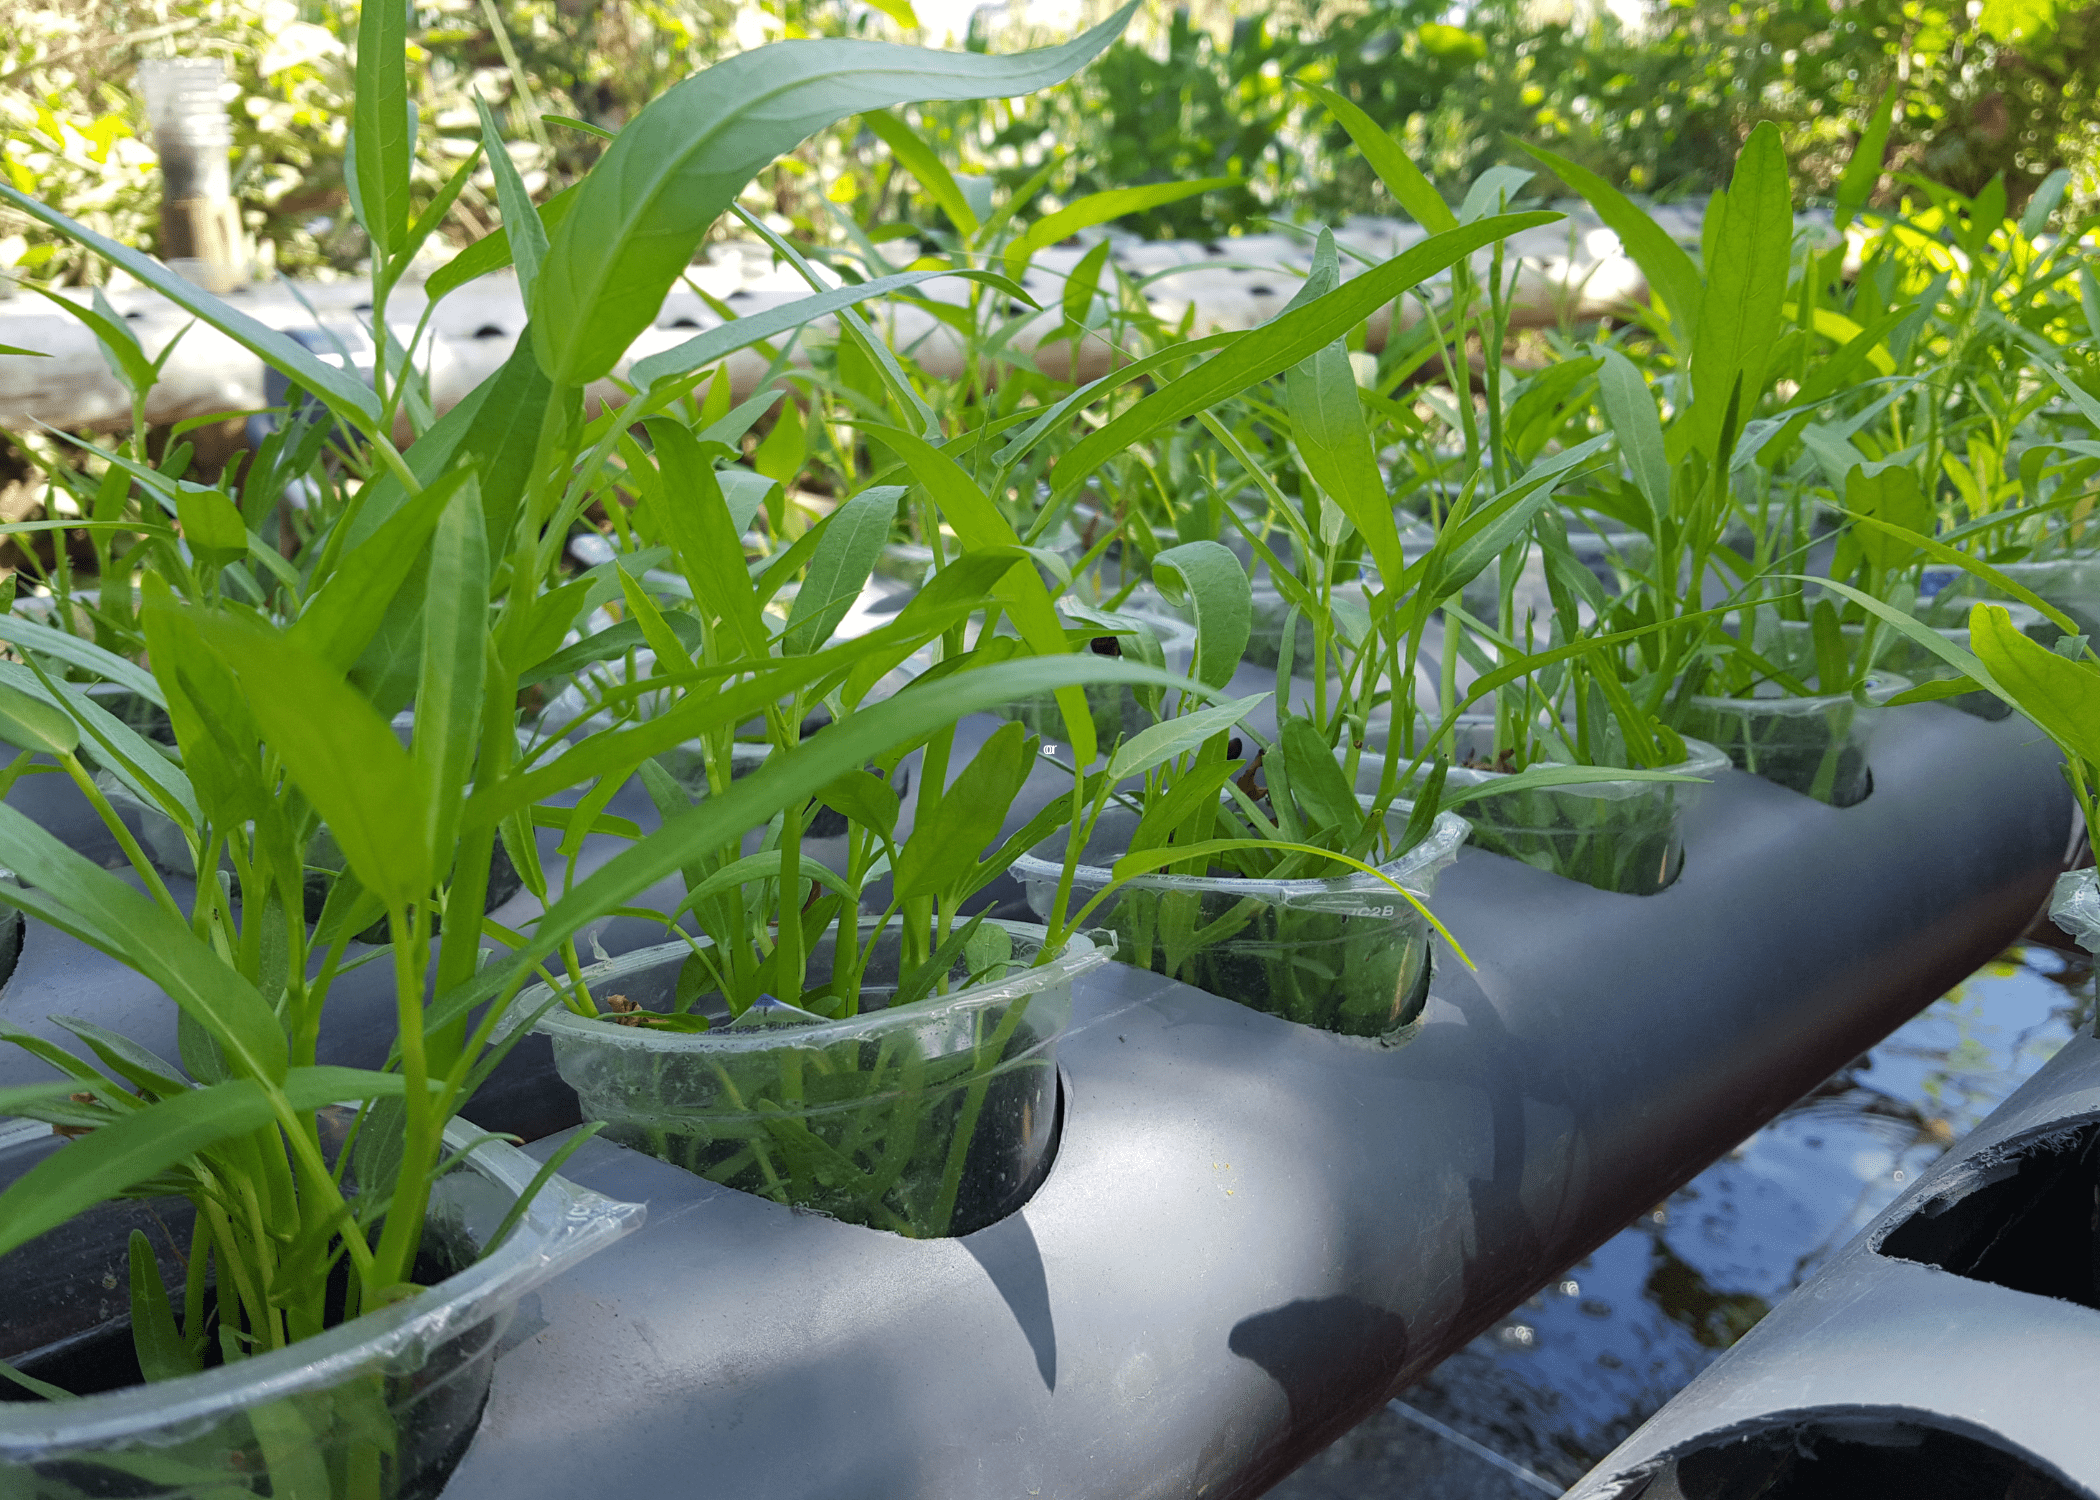 hydroponic garden system